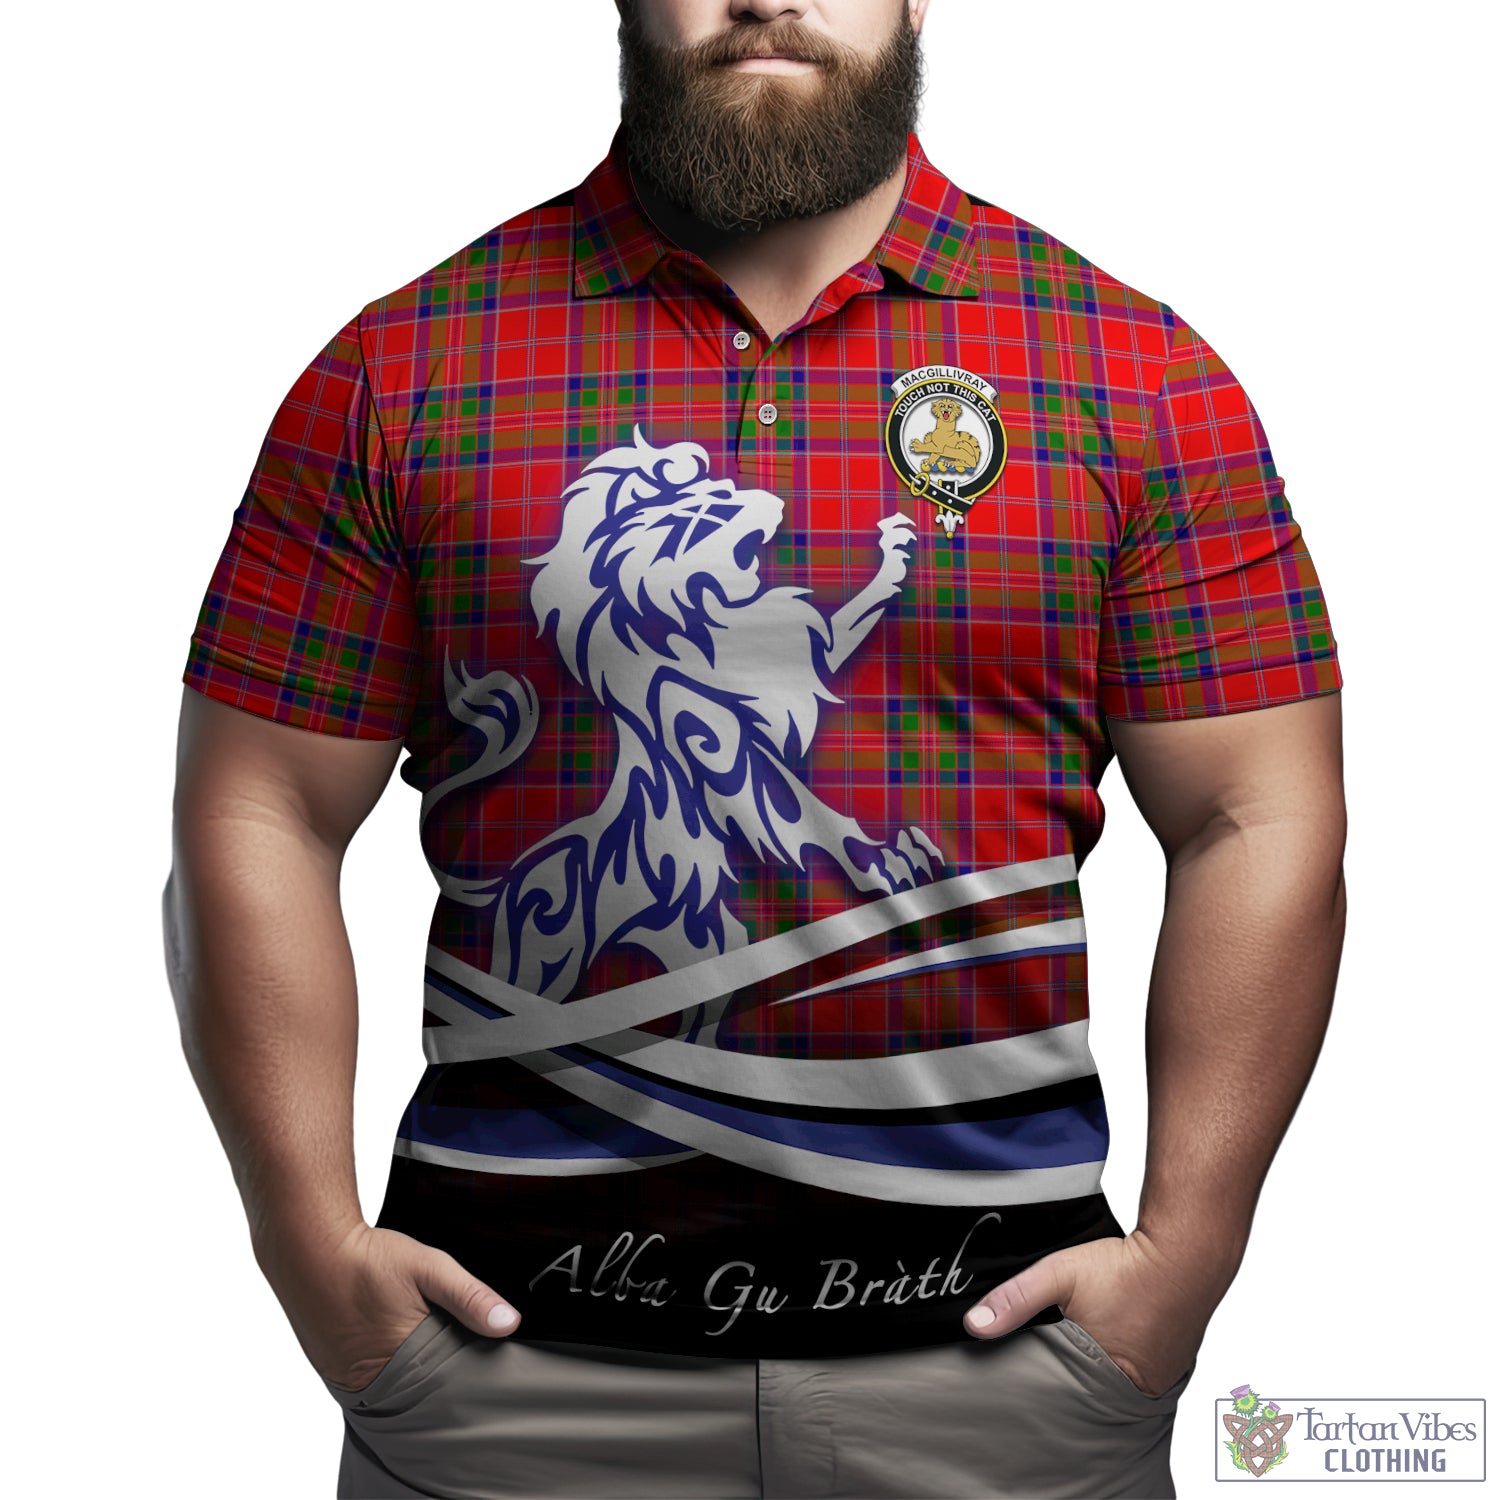 macgillivray-modern-tartan-polo-shirt-with-alba-gu-brath-regal-lion-emblem